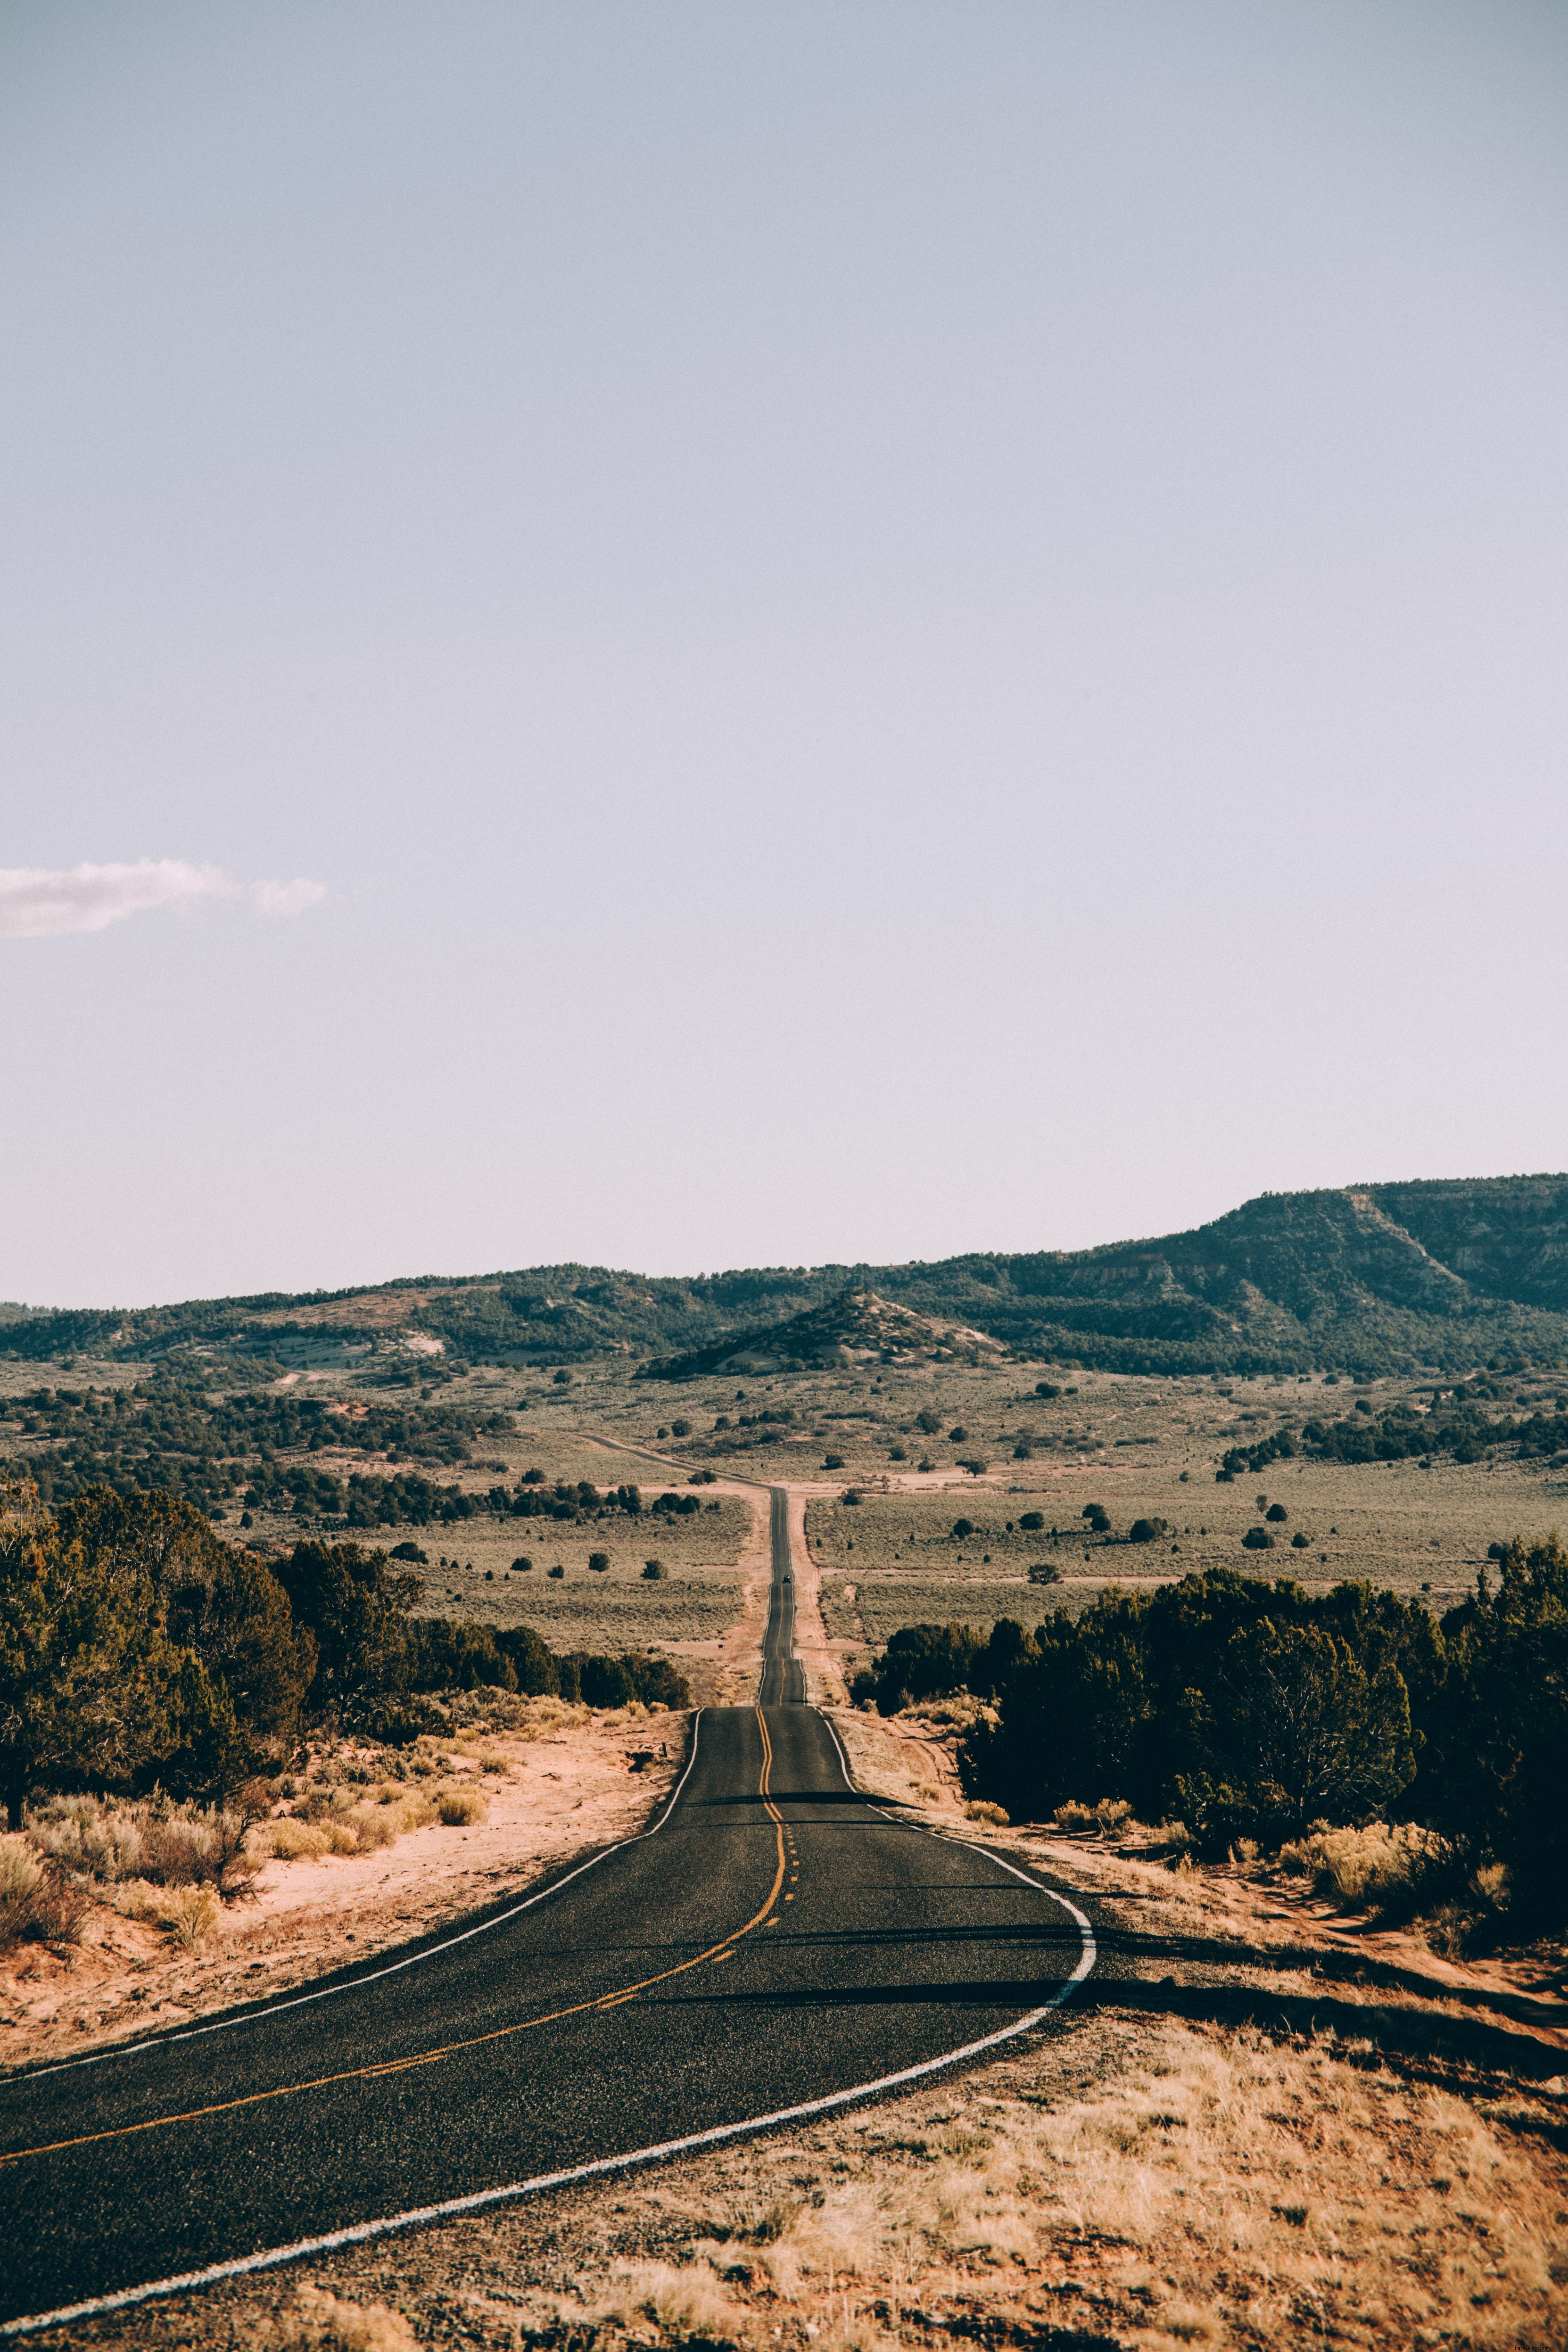 Carretera larga en el desierto de Arizona Foto